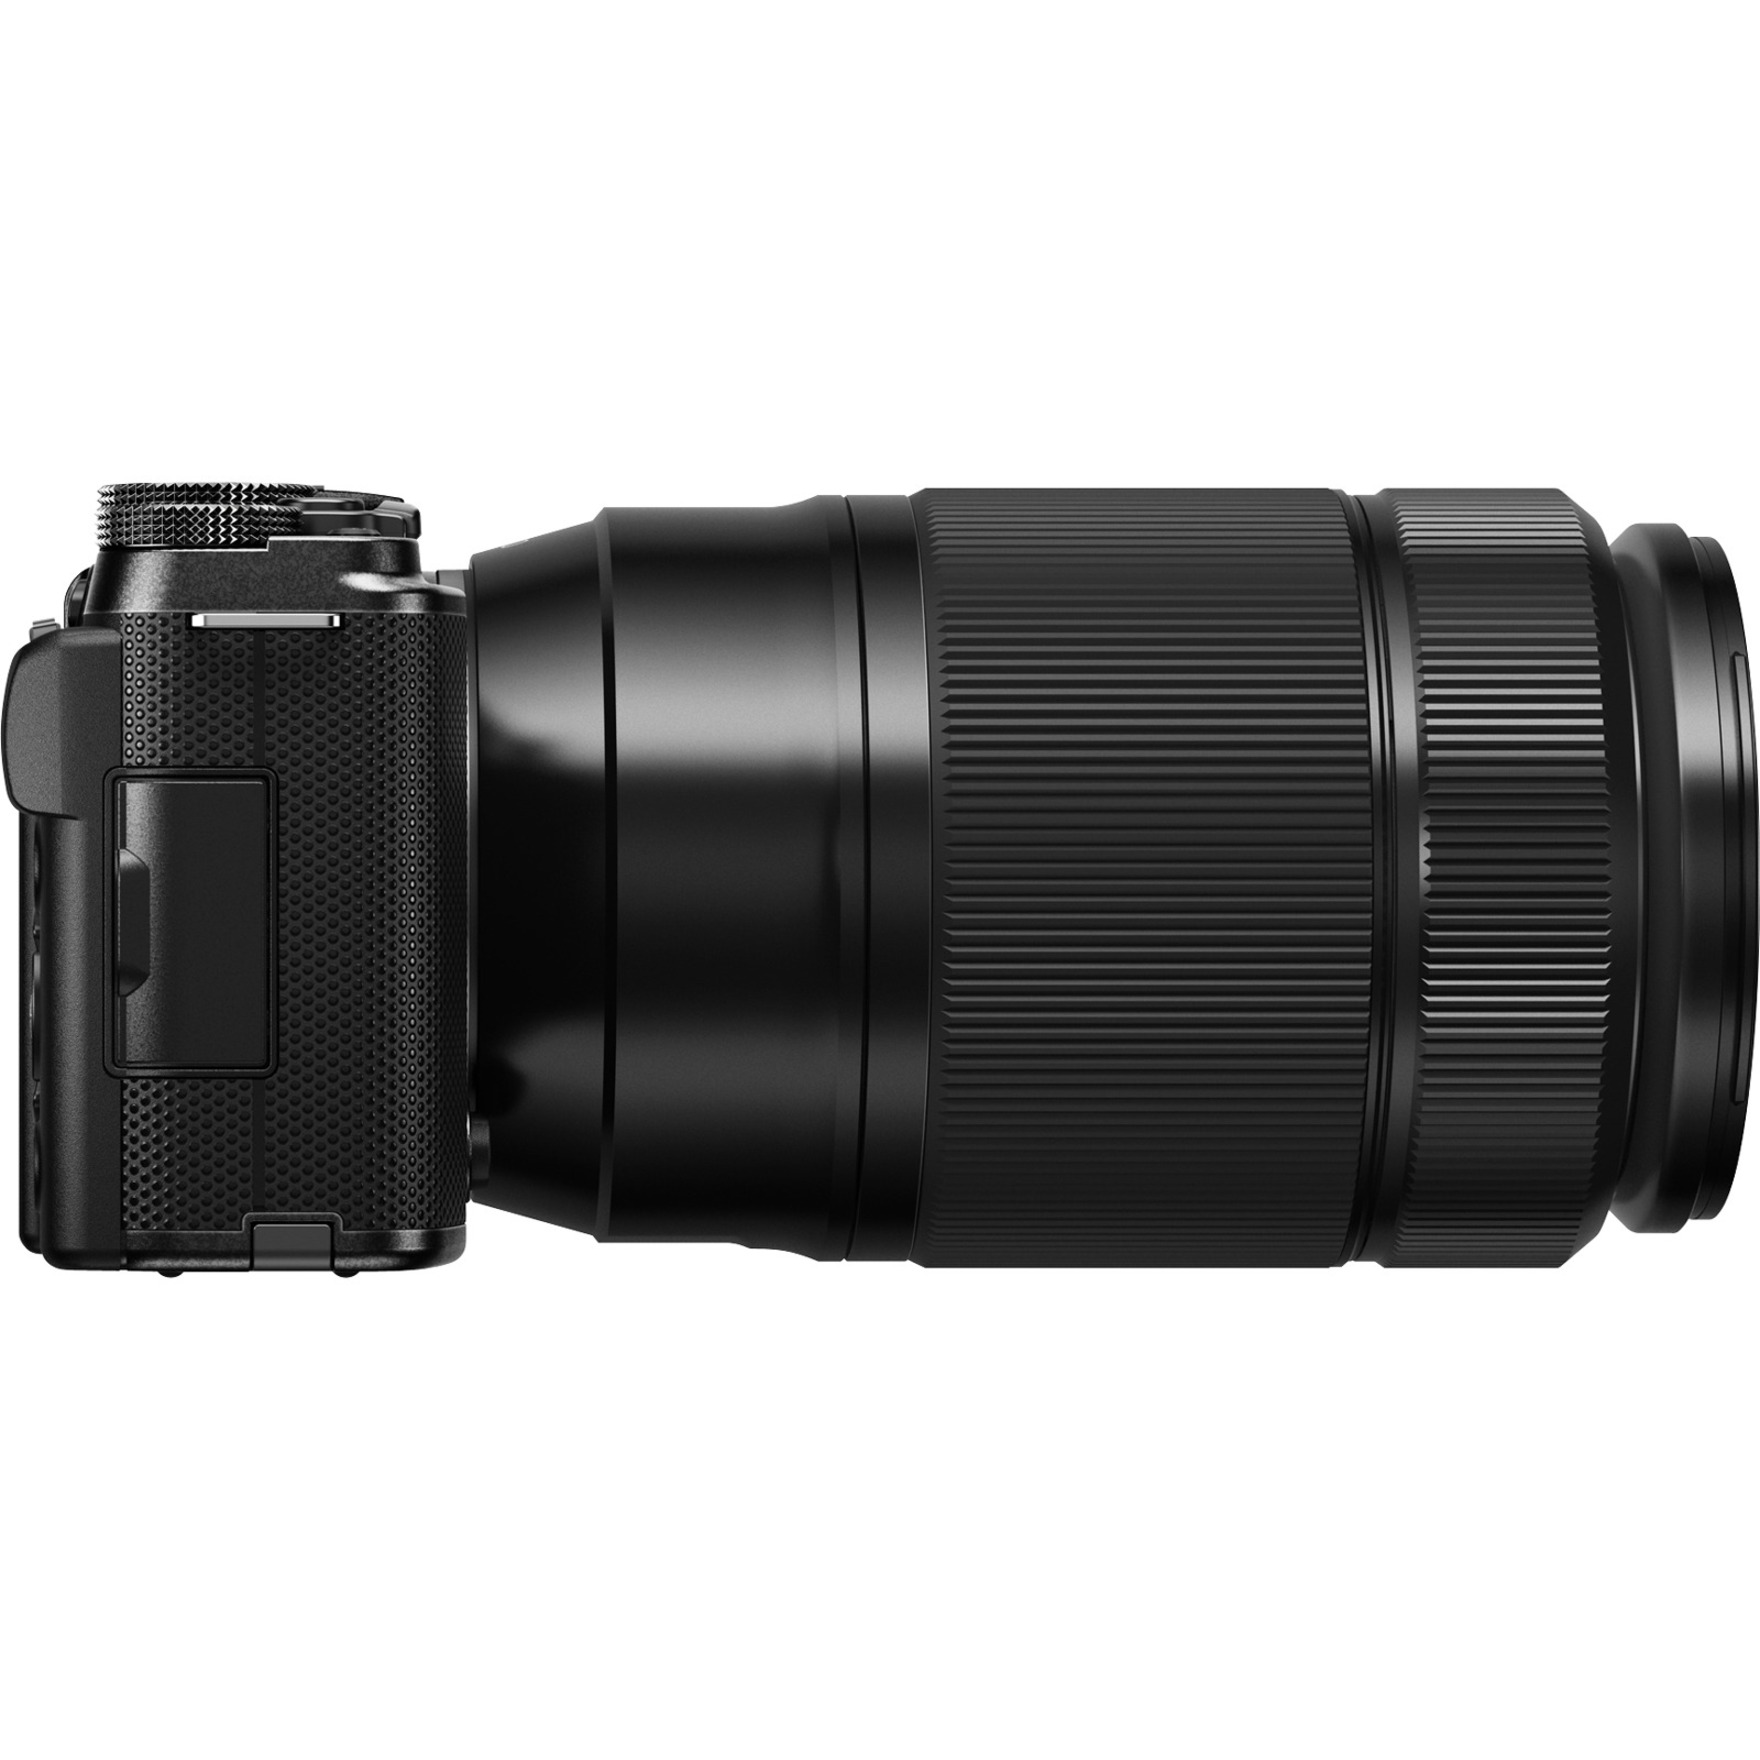 Fujifilm X-A1 16.3 Megapixel Mirrorless Camera with Lens, 0.63", 1.97", Black - image 5 of 7